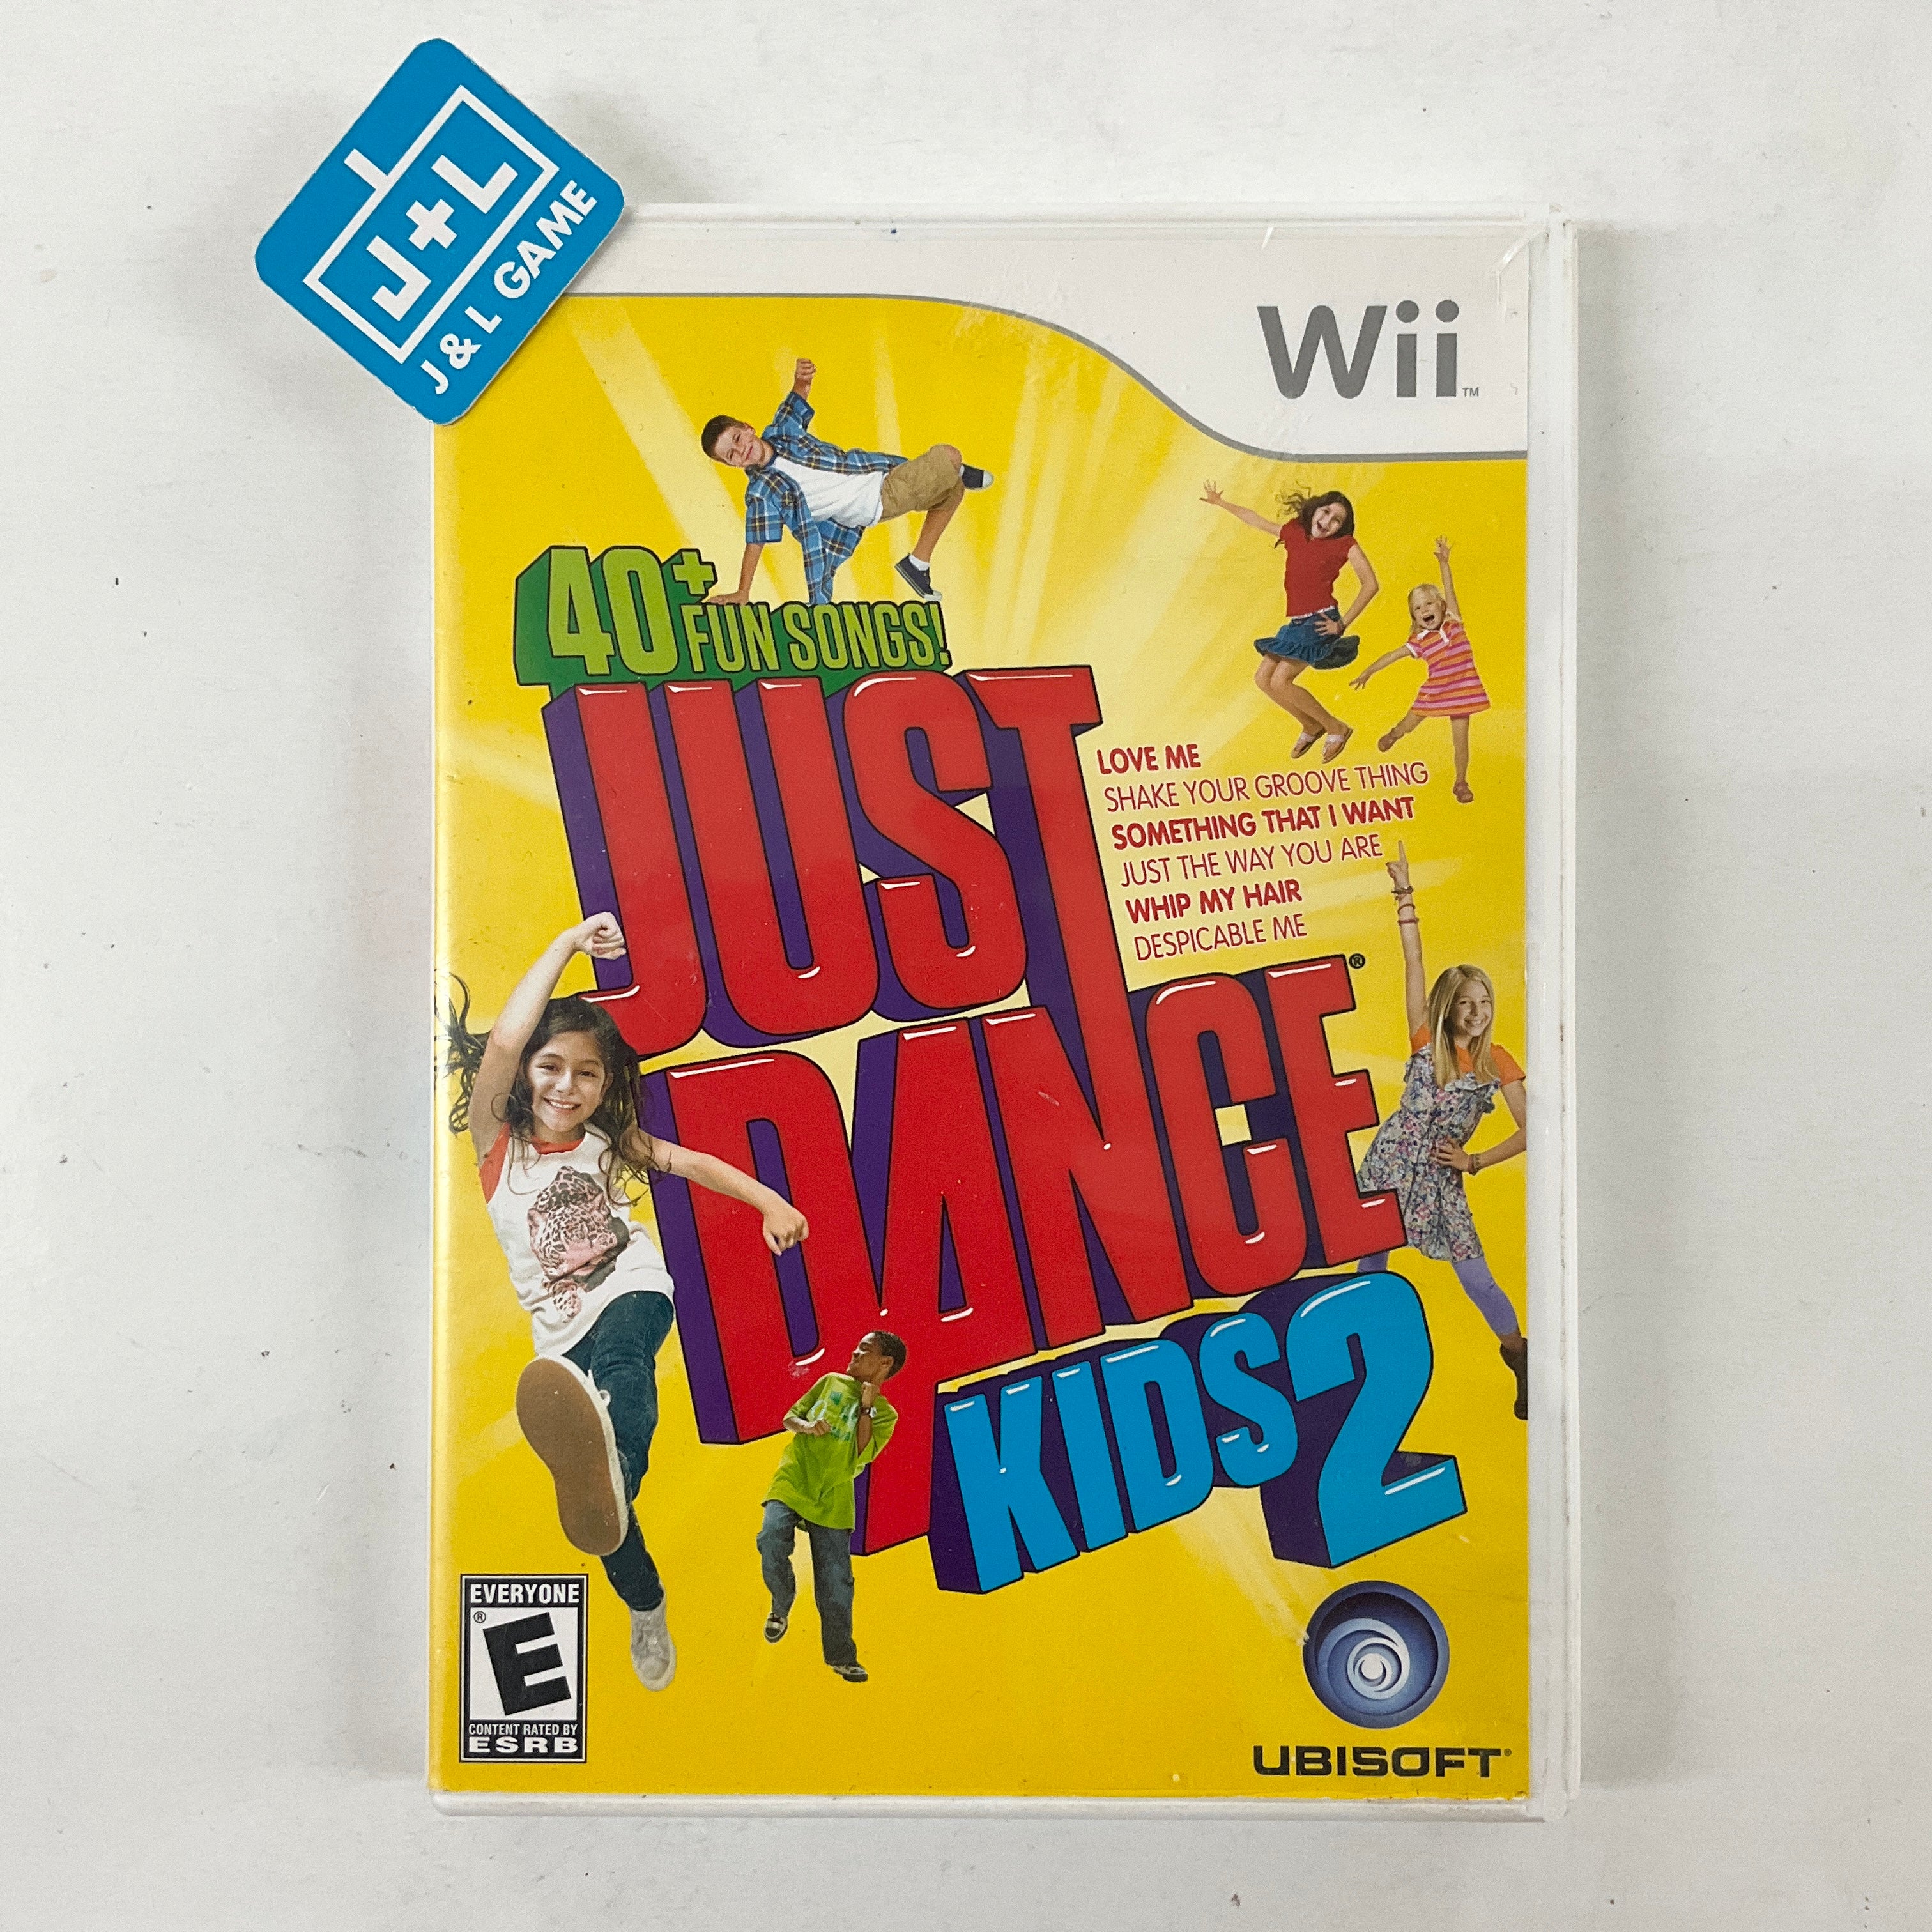 Just Dance Kids 2 - Nintendo Wii [Pre-Owned] Video Games Ubisoft   